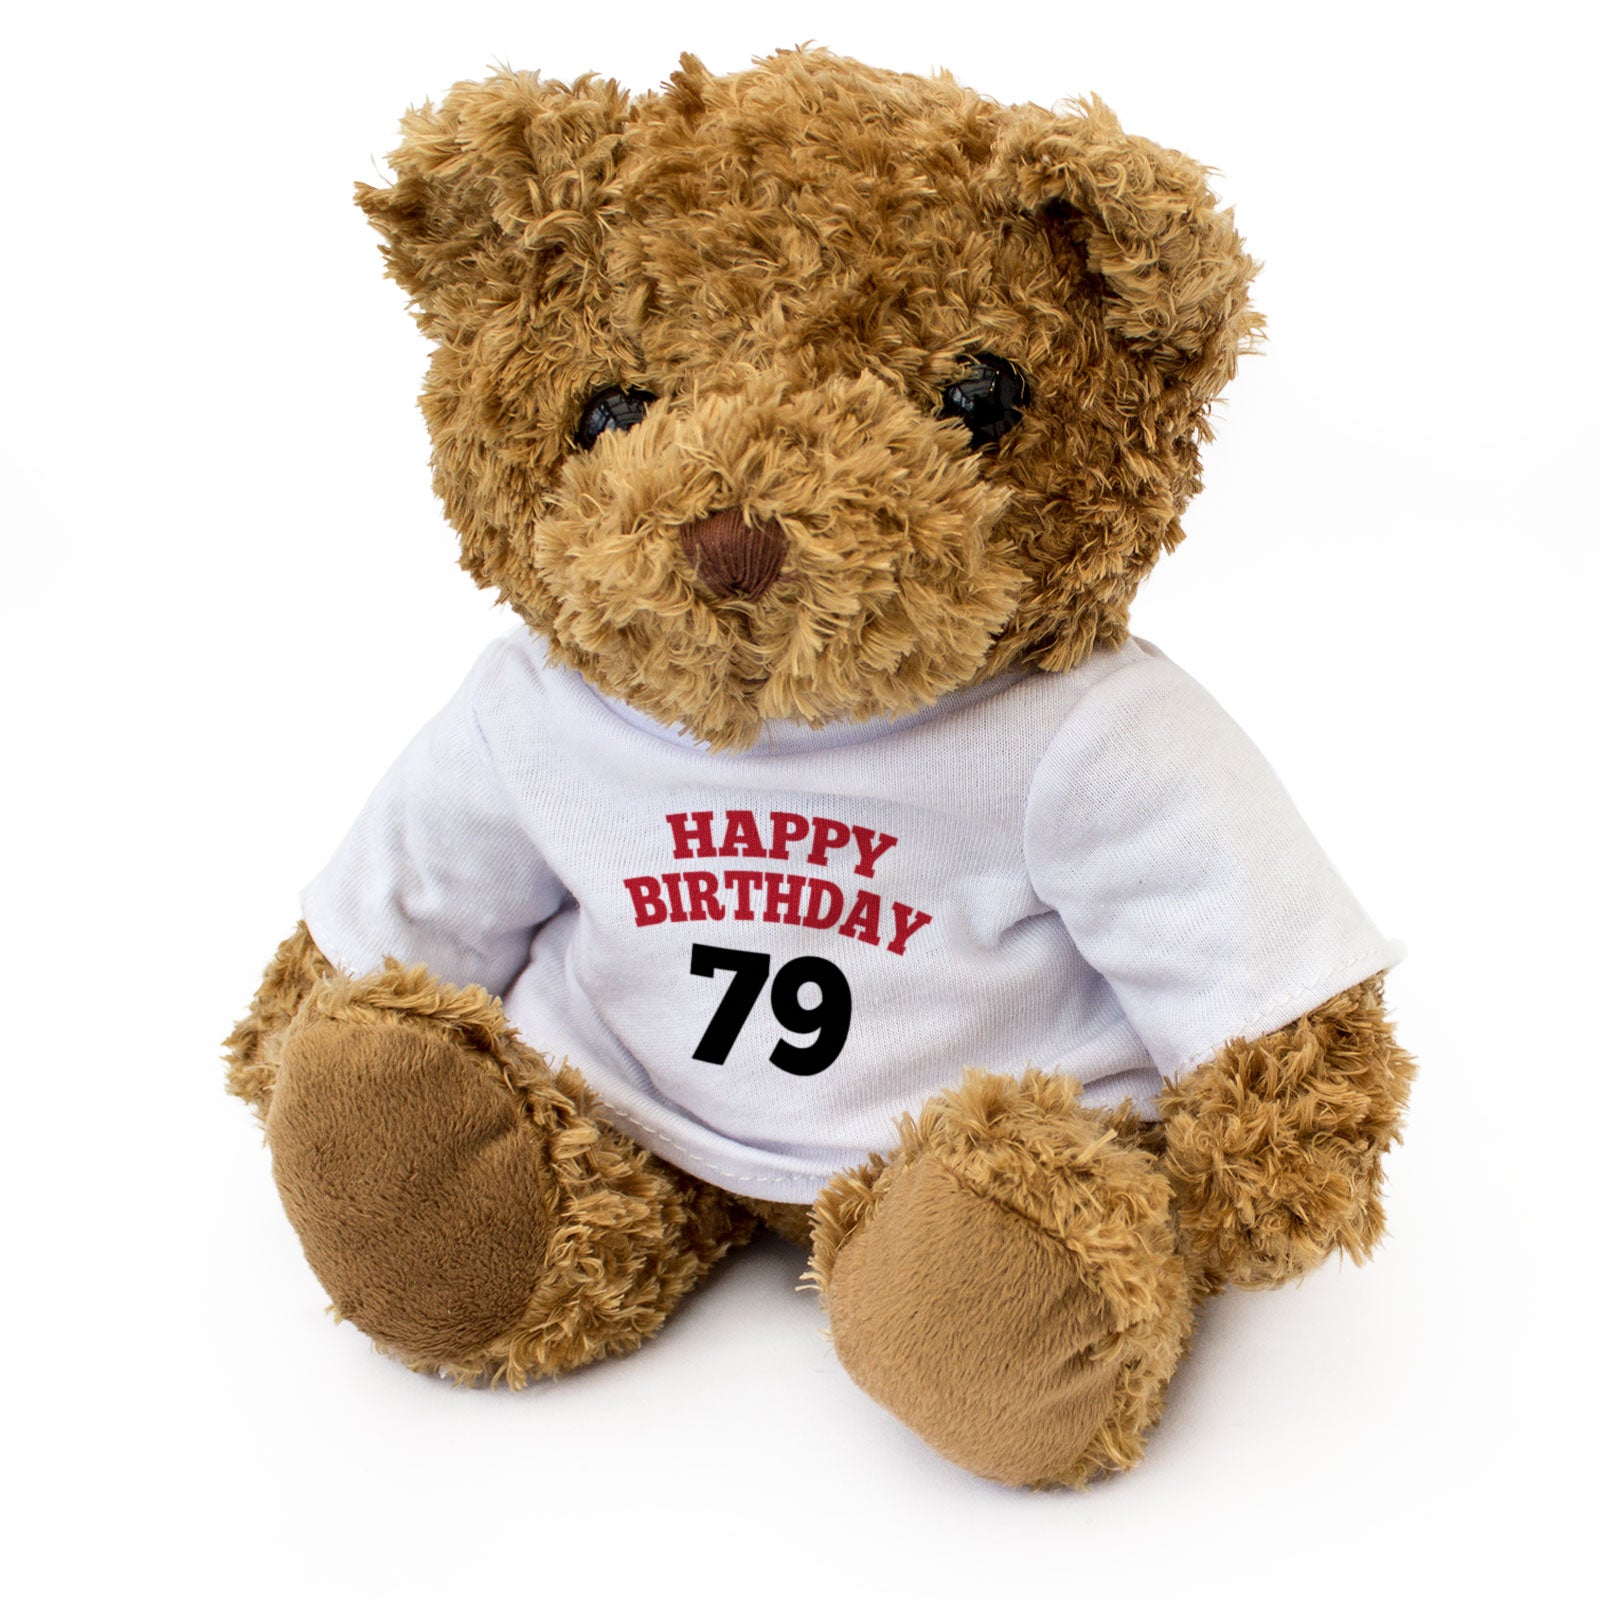 Happy Birthday 79 - Teddy Bear